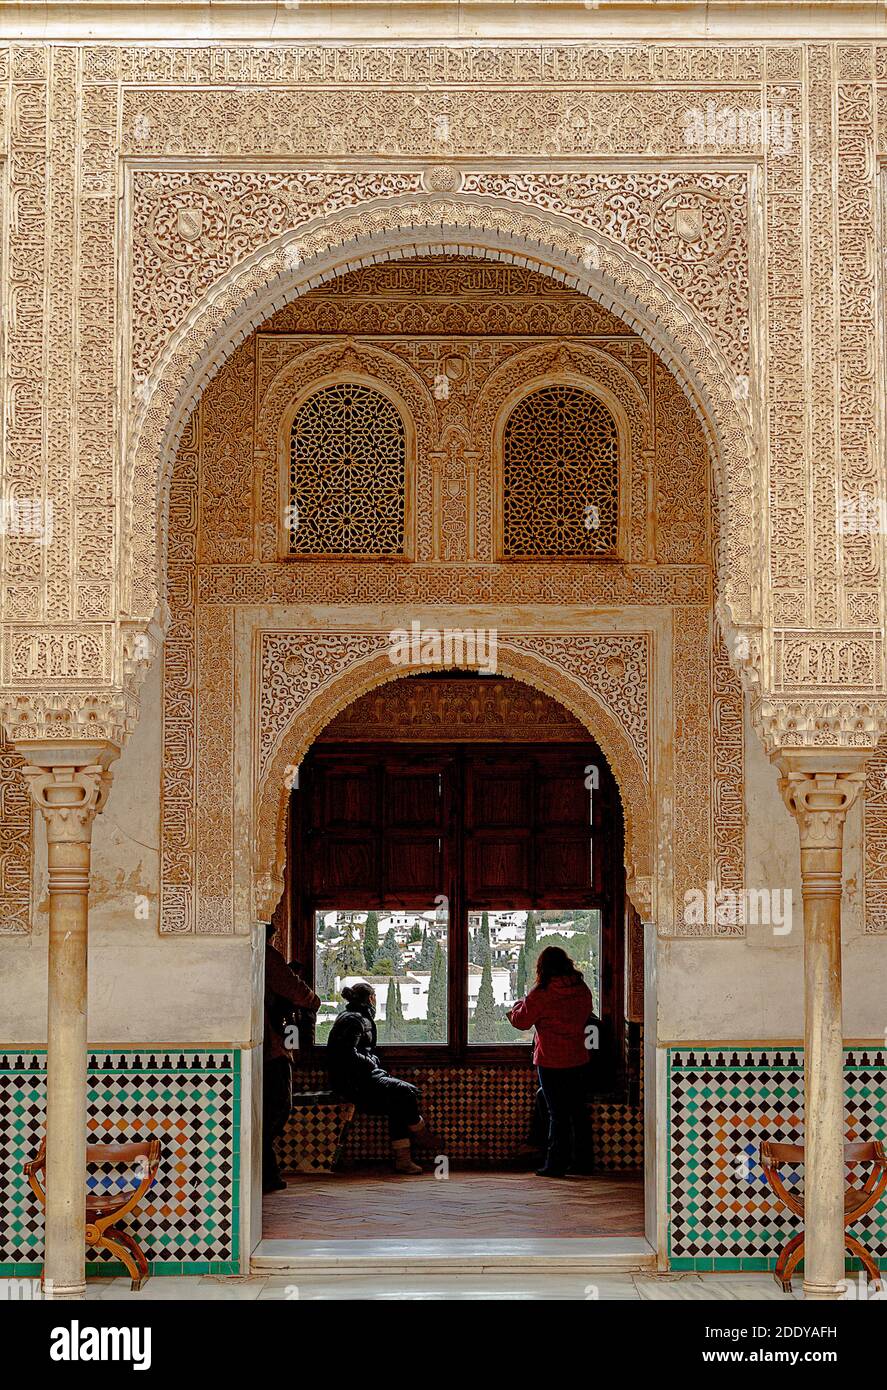 The Golden Chamber, Patio del Cuarto Dorado, Alhambra, Spain. Stock Photo